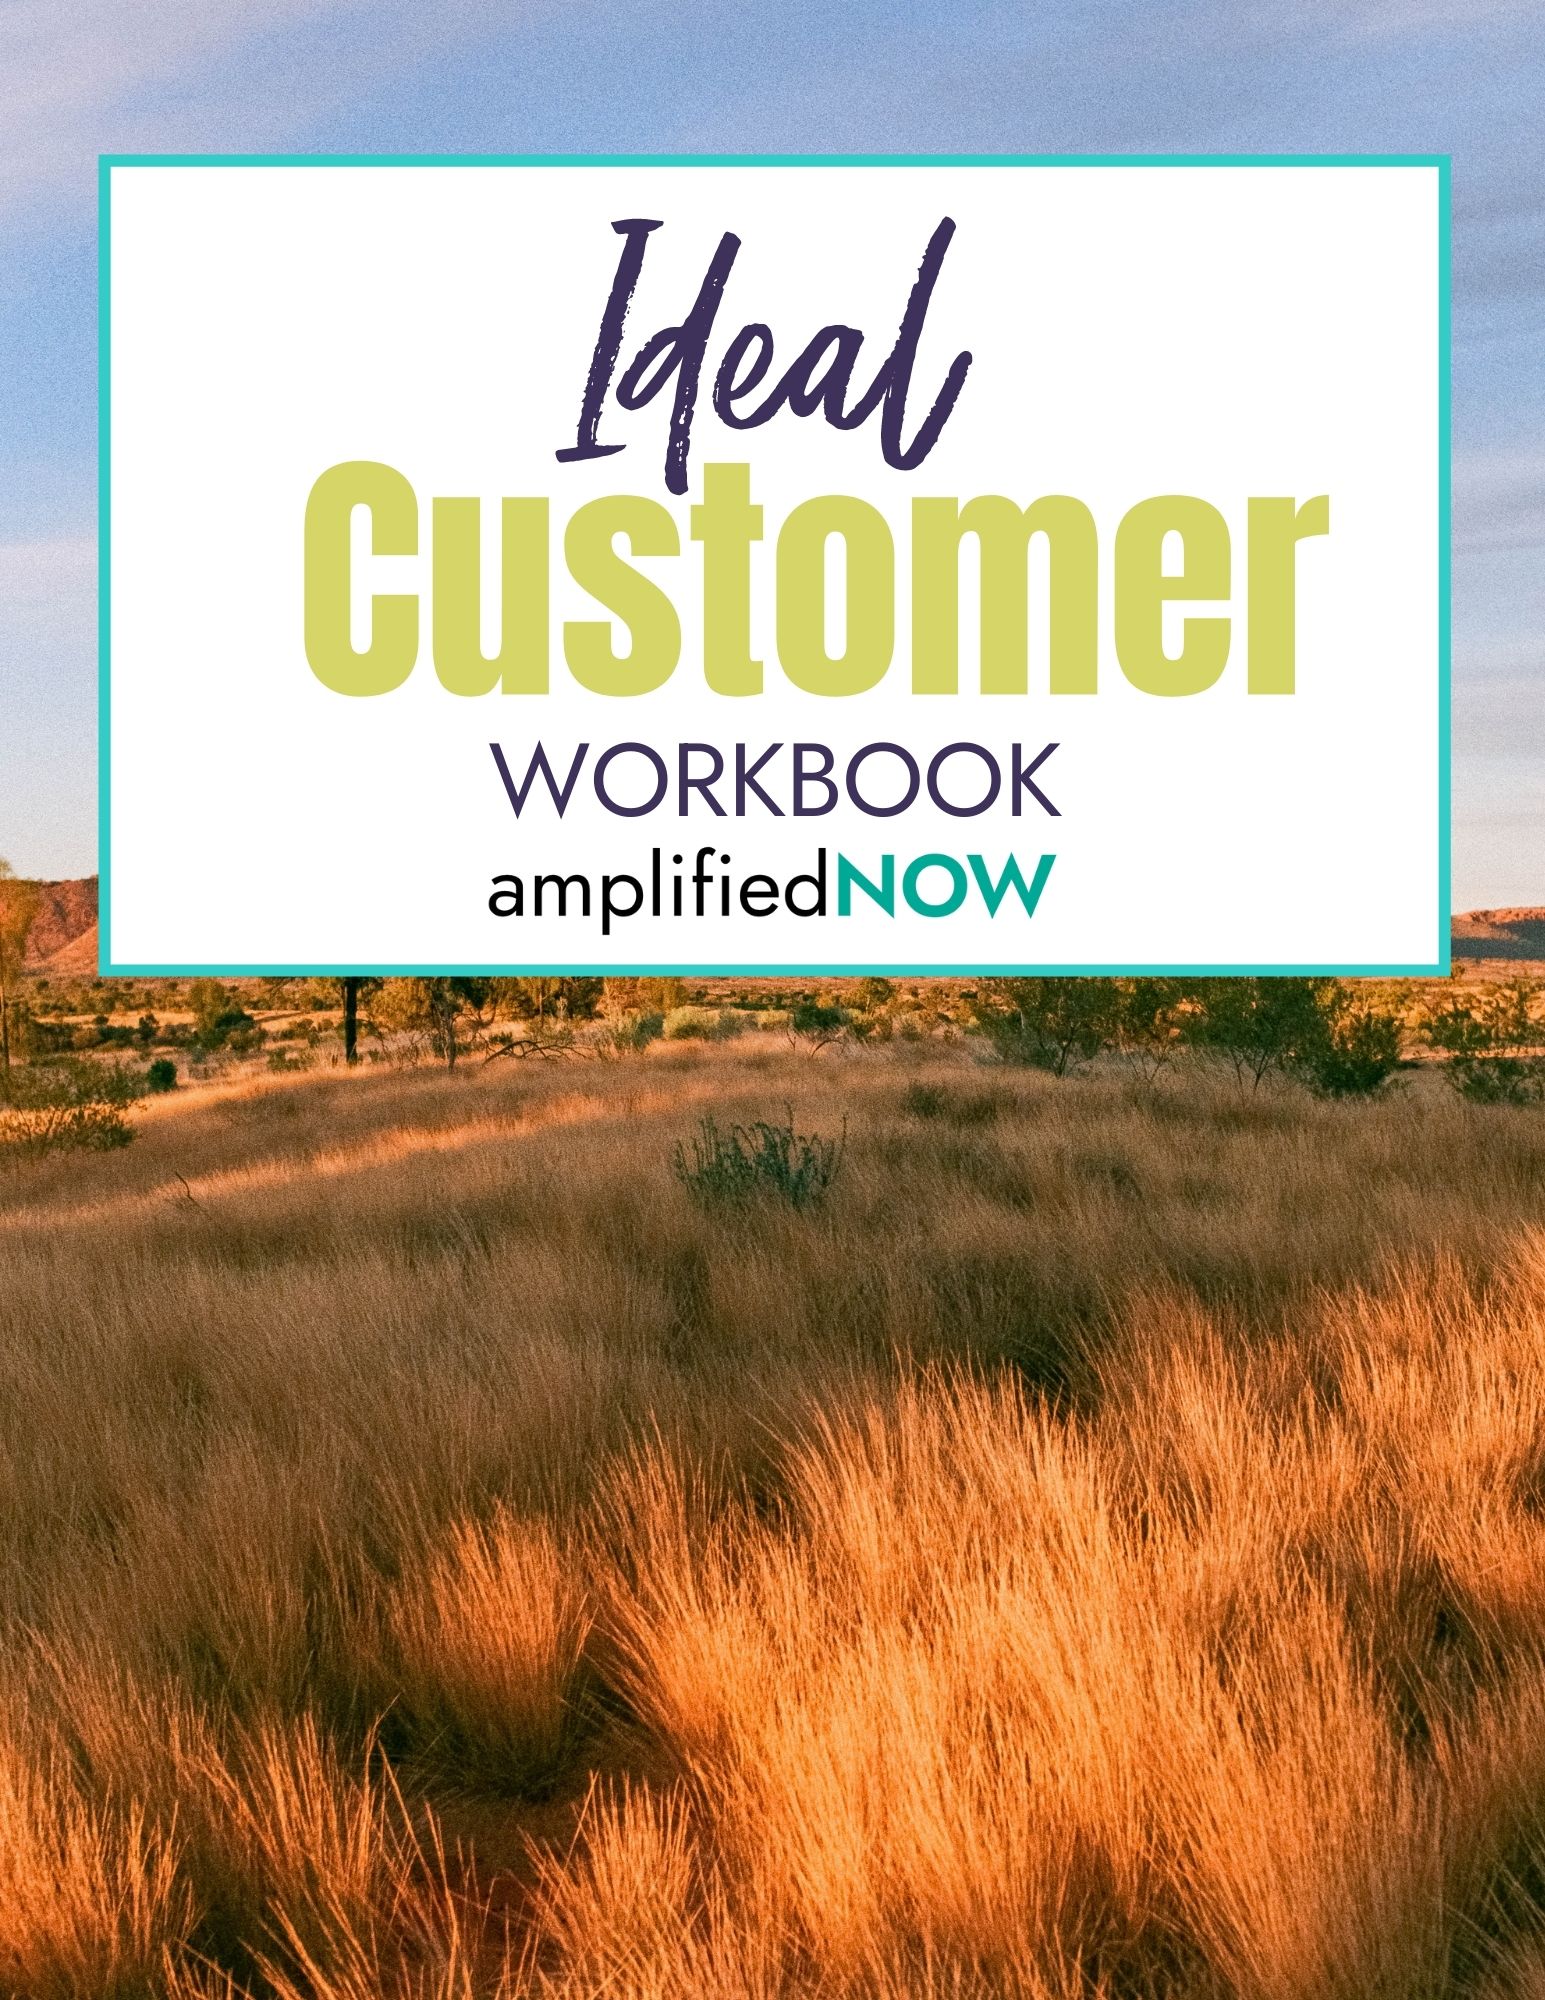 Ideal Customer Workbook (1)